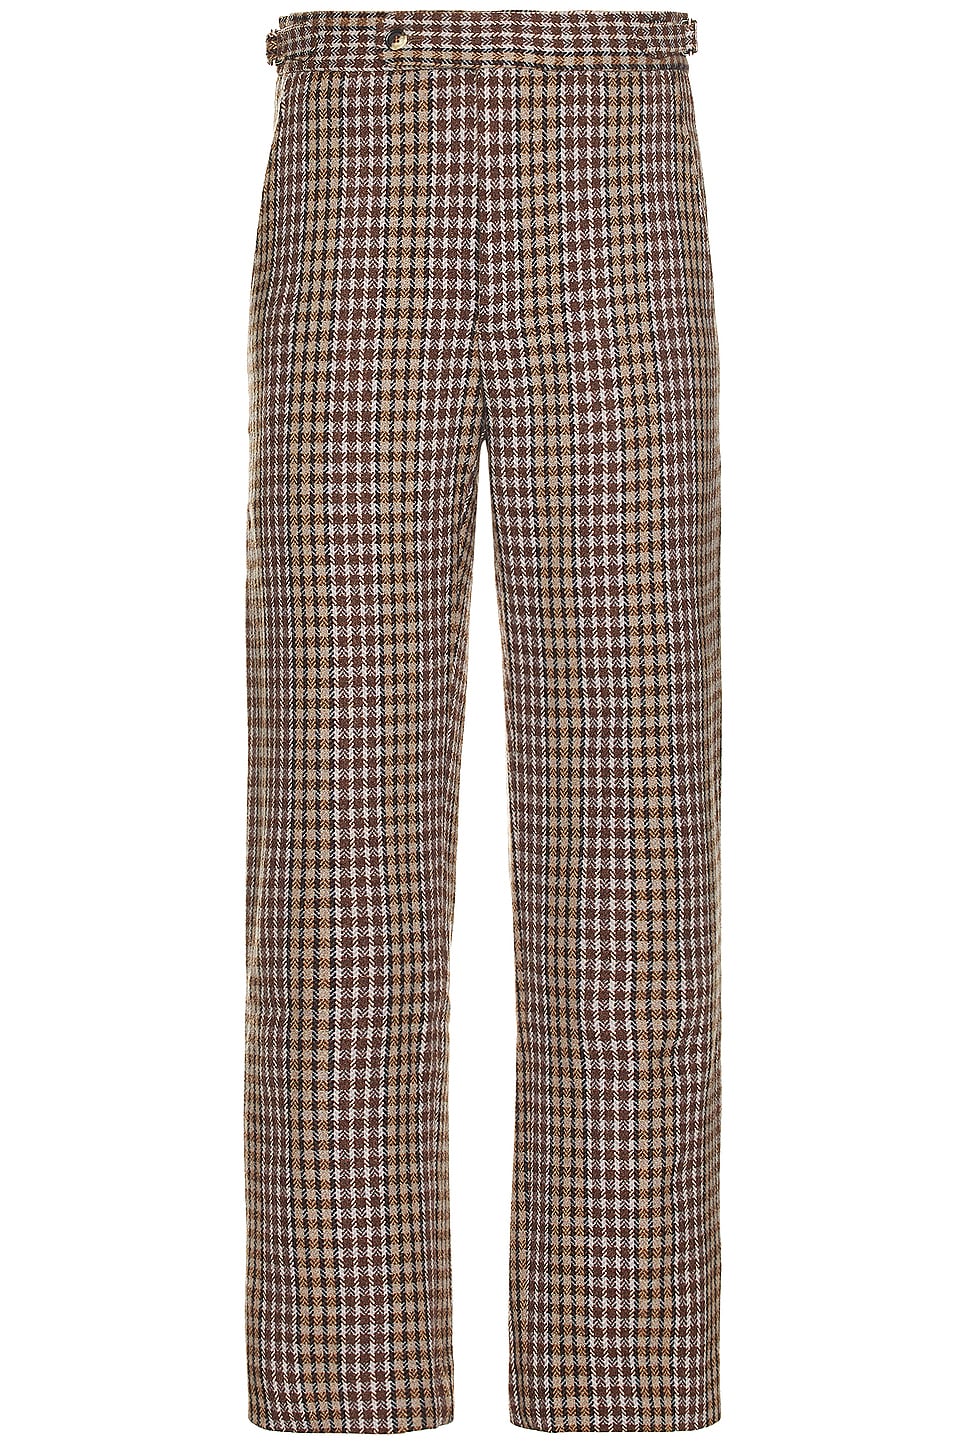 Image 1 of BODE Marston Stripe Trousers in Multi